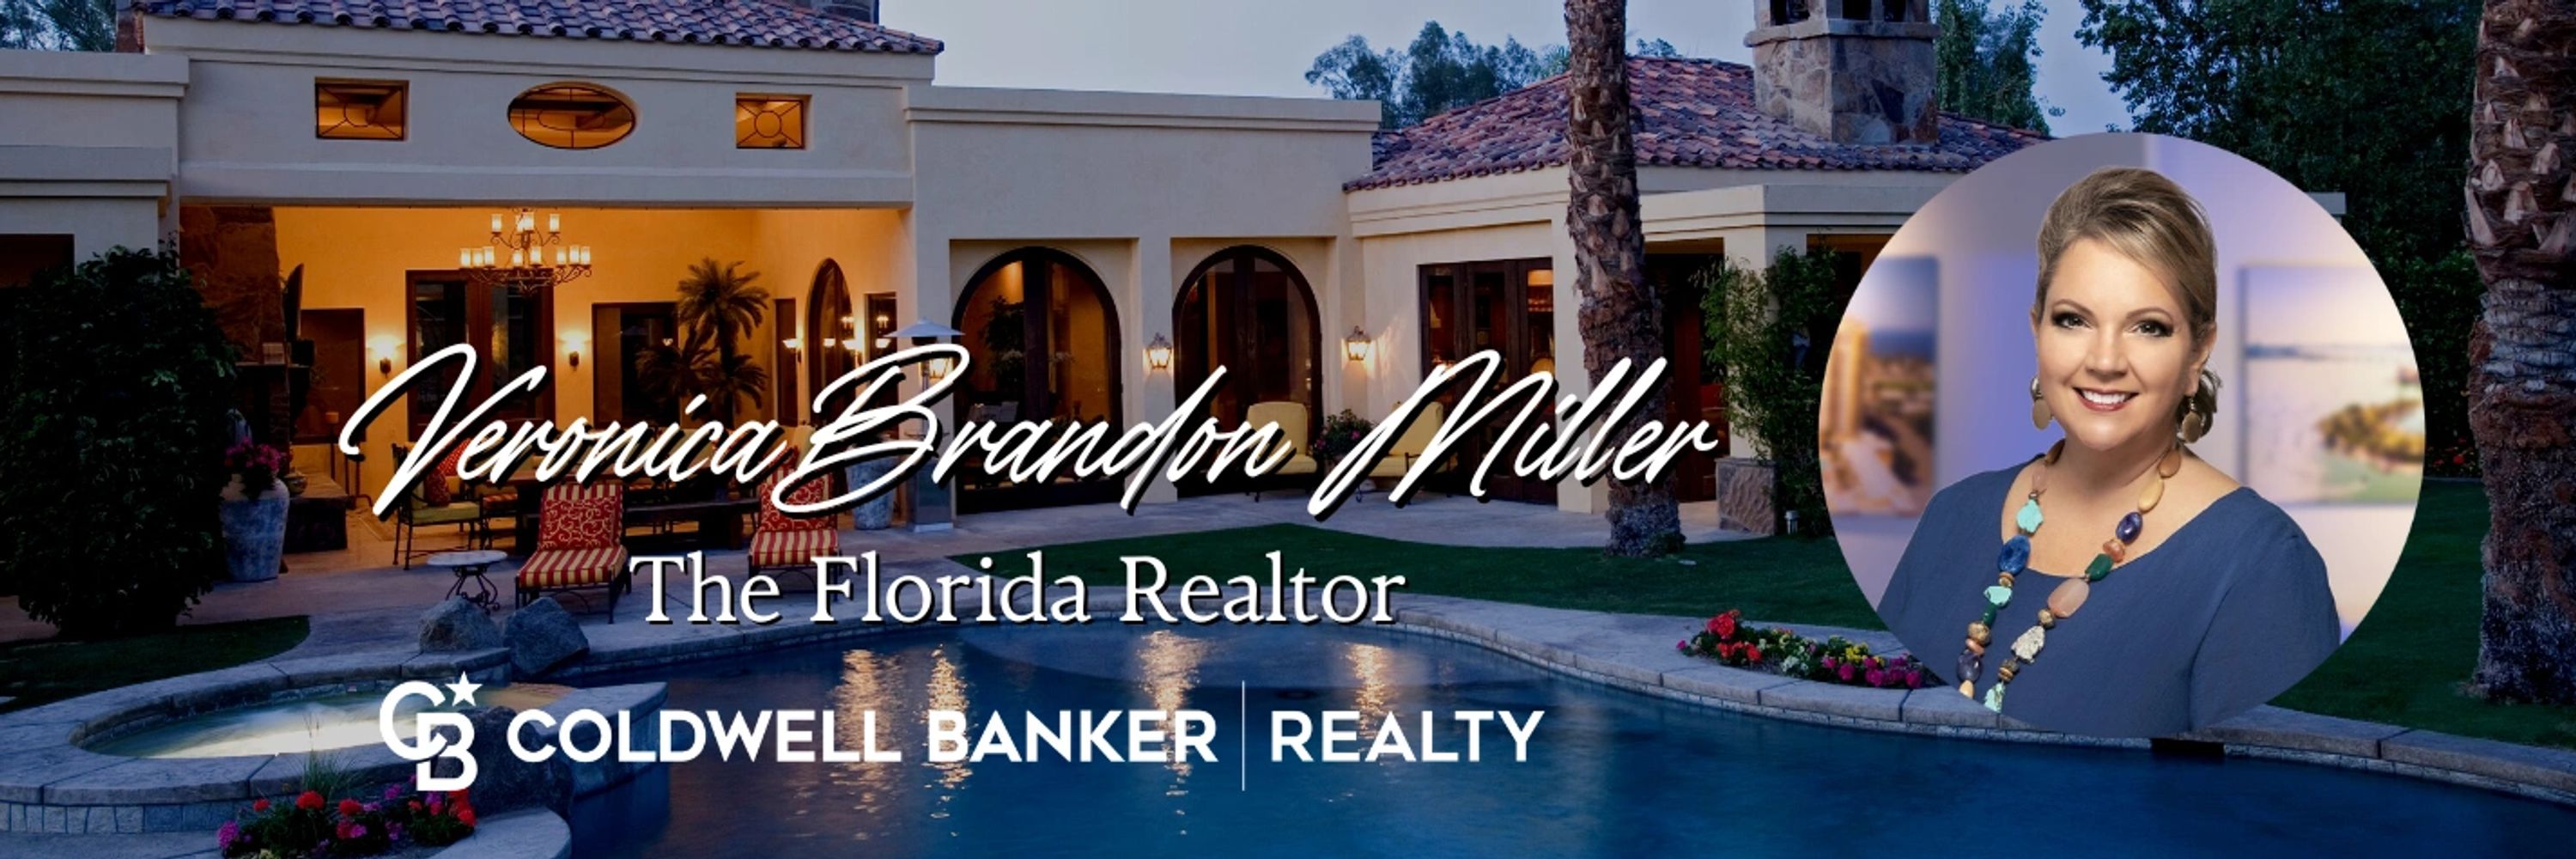 Veronica Brandon Miller Sarasota Realtor with Coldwell Banker Realty